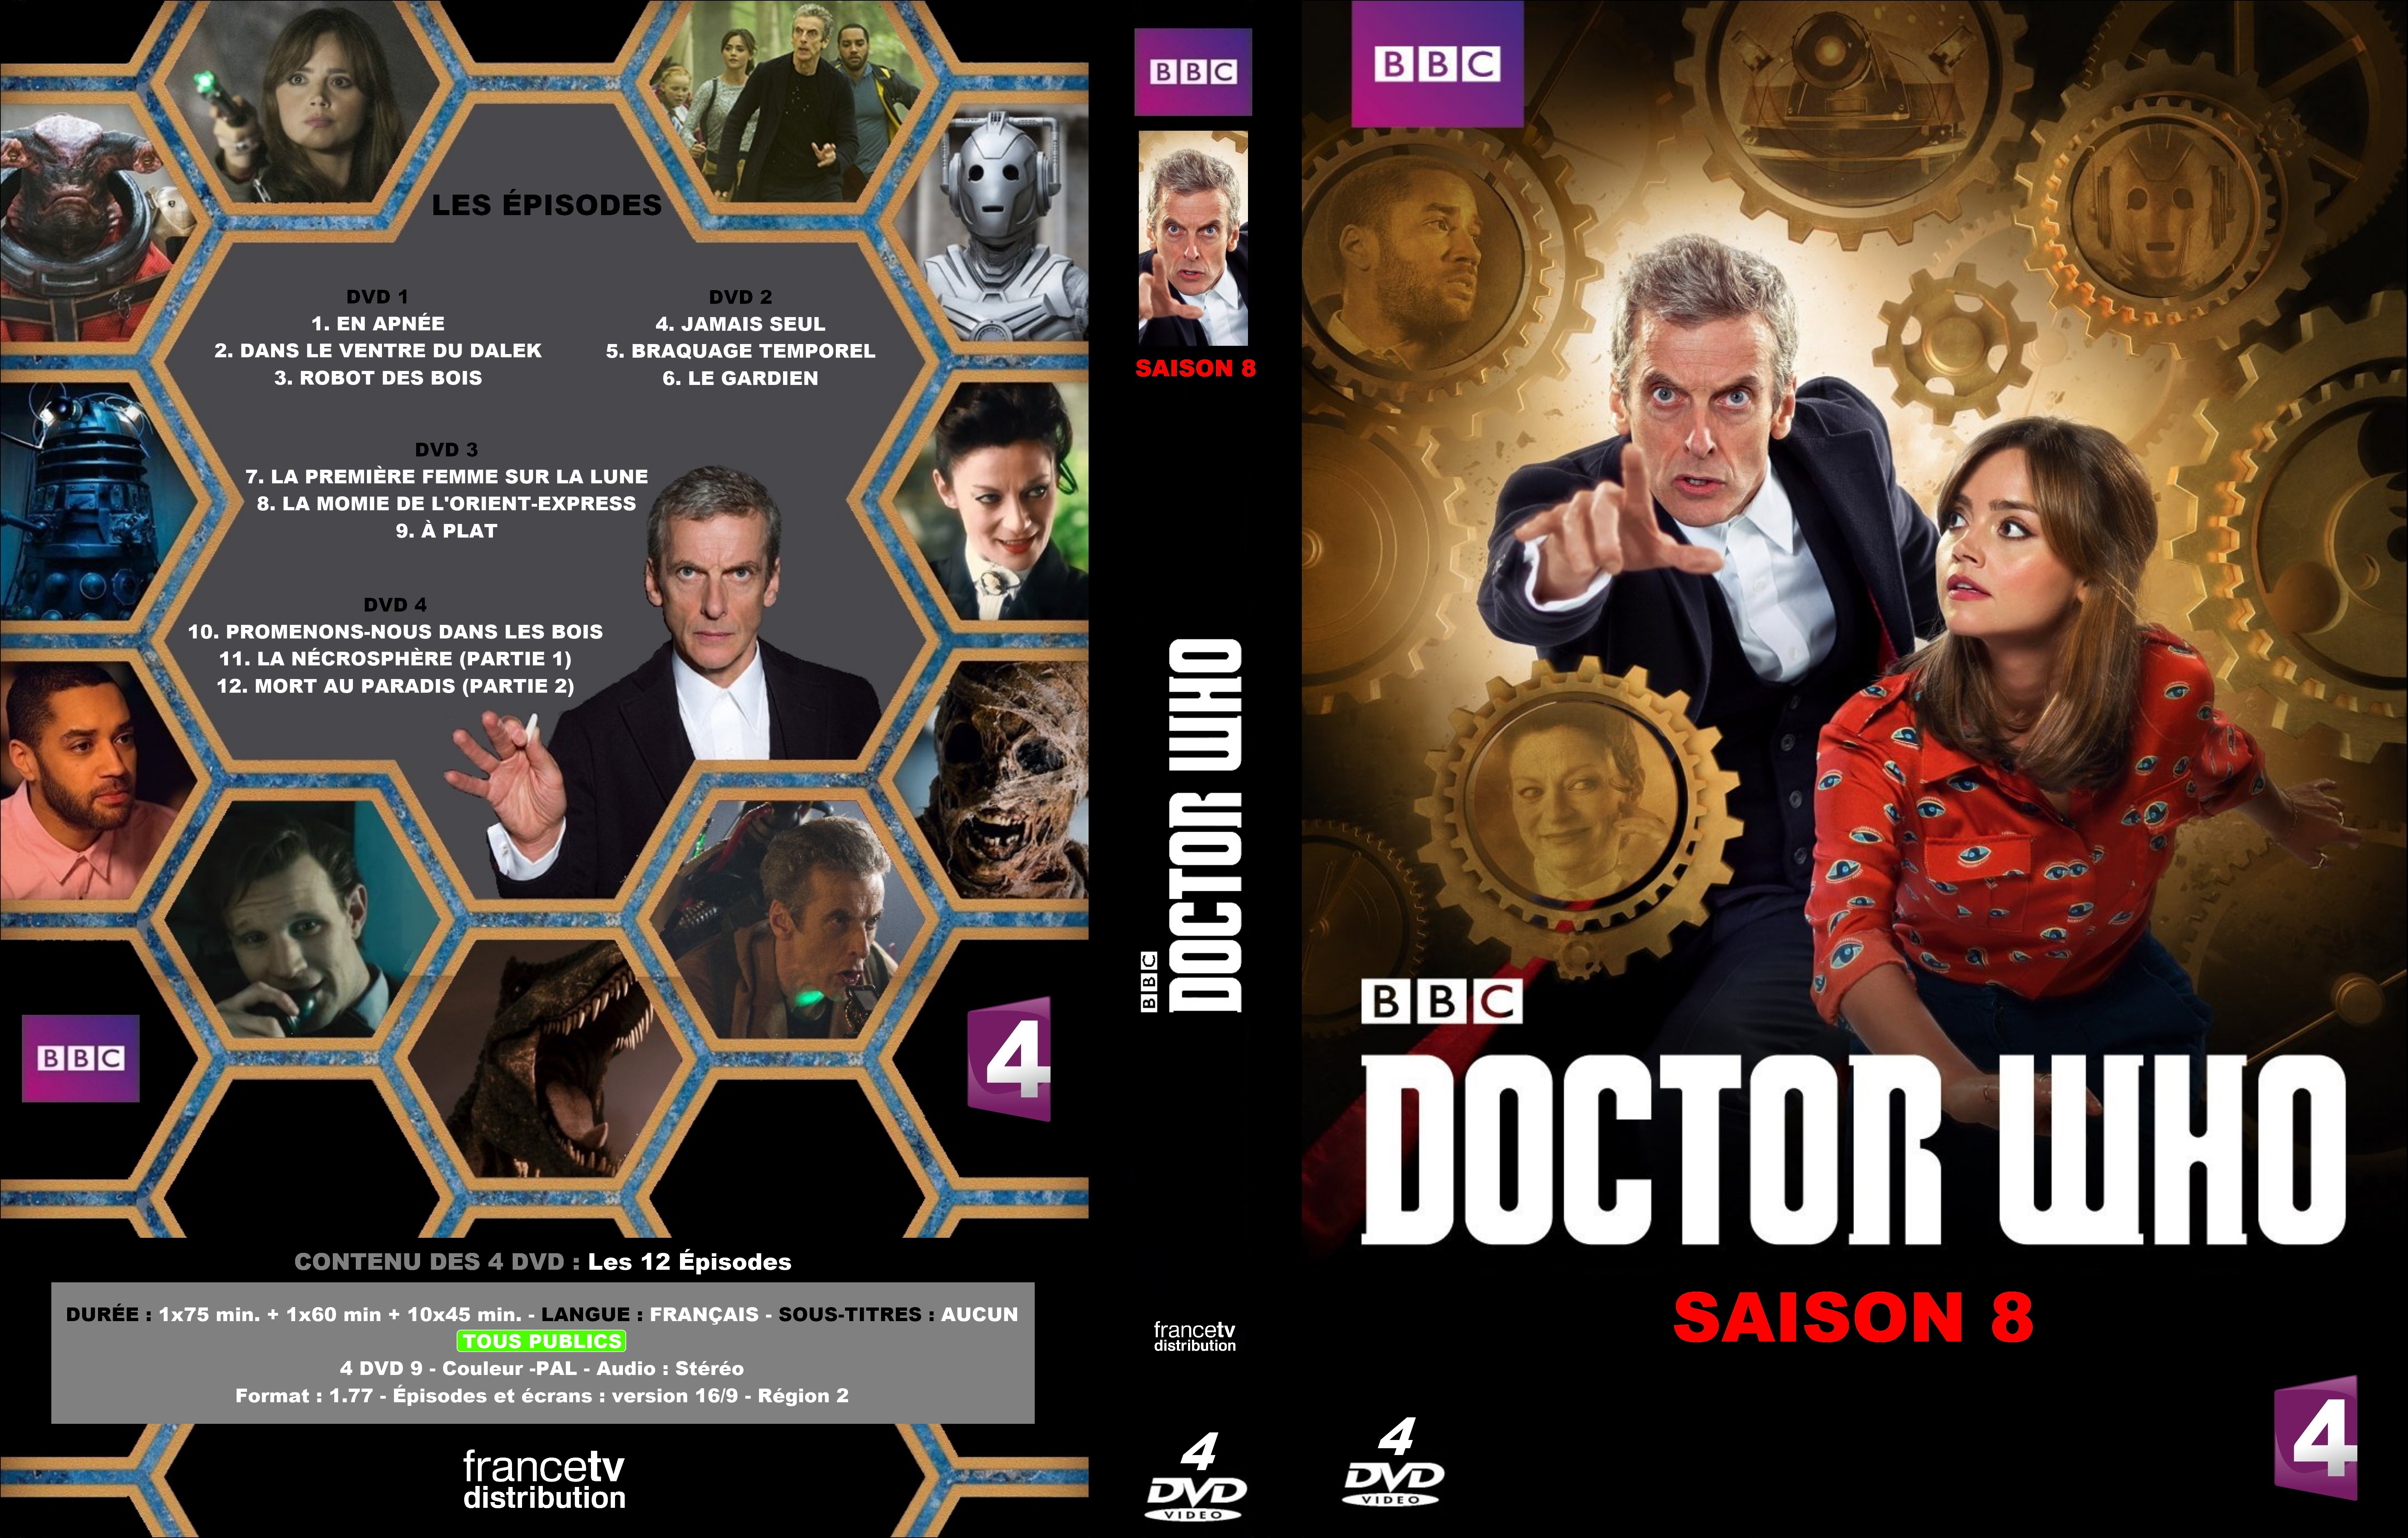 Jaquette DVD Doctor Who Saison 8 custom